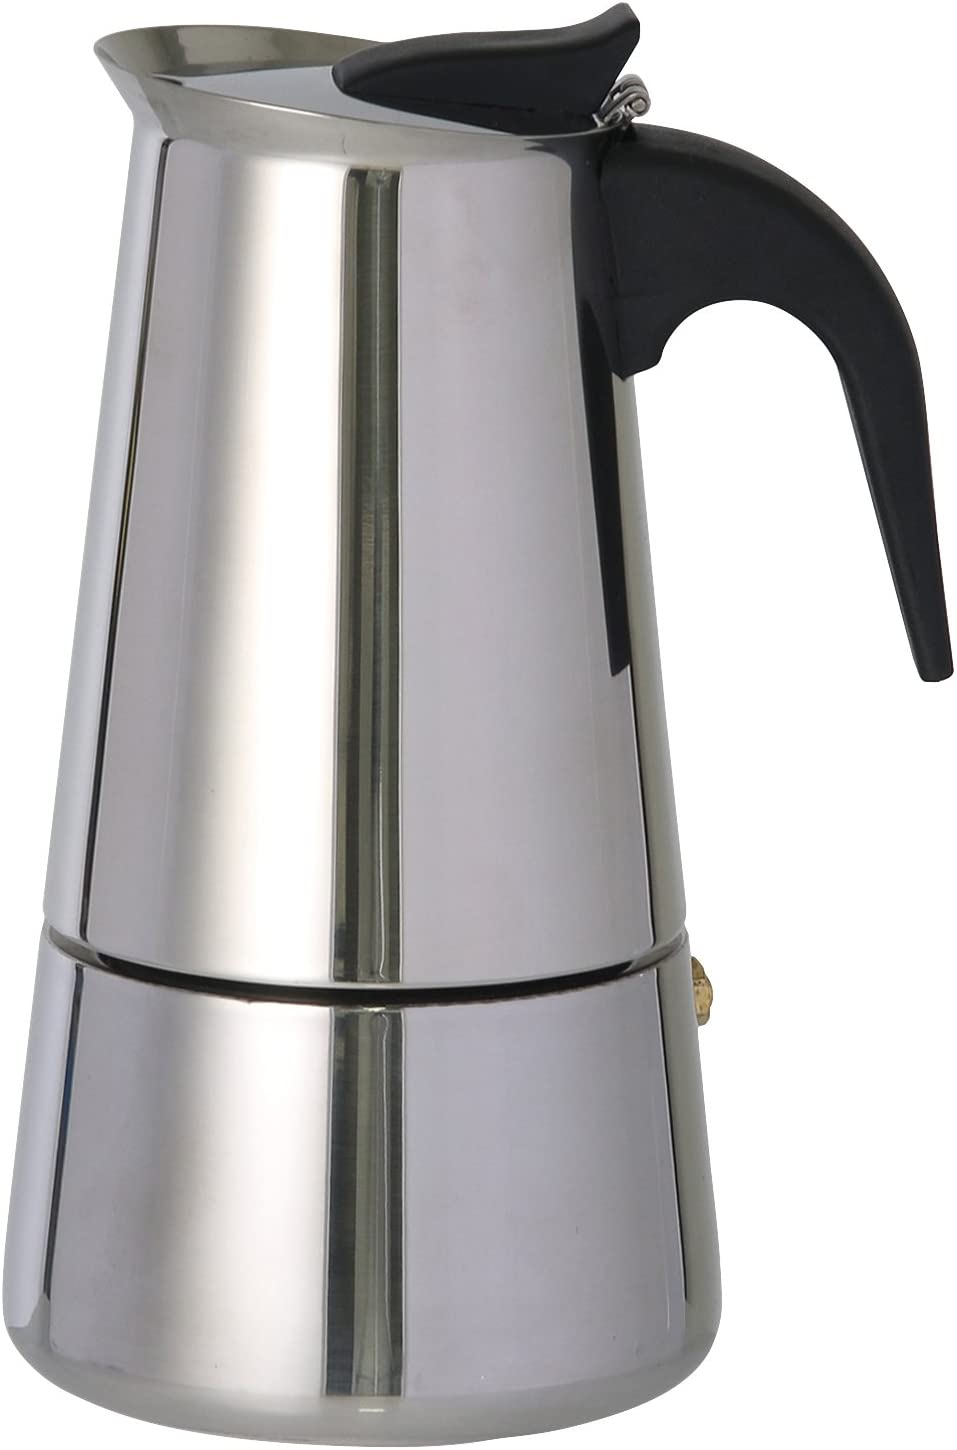 Ingenio von Tefal Espresso and coffee machine, espresso maker for 6 cups - including induction